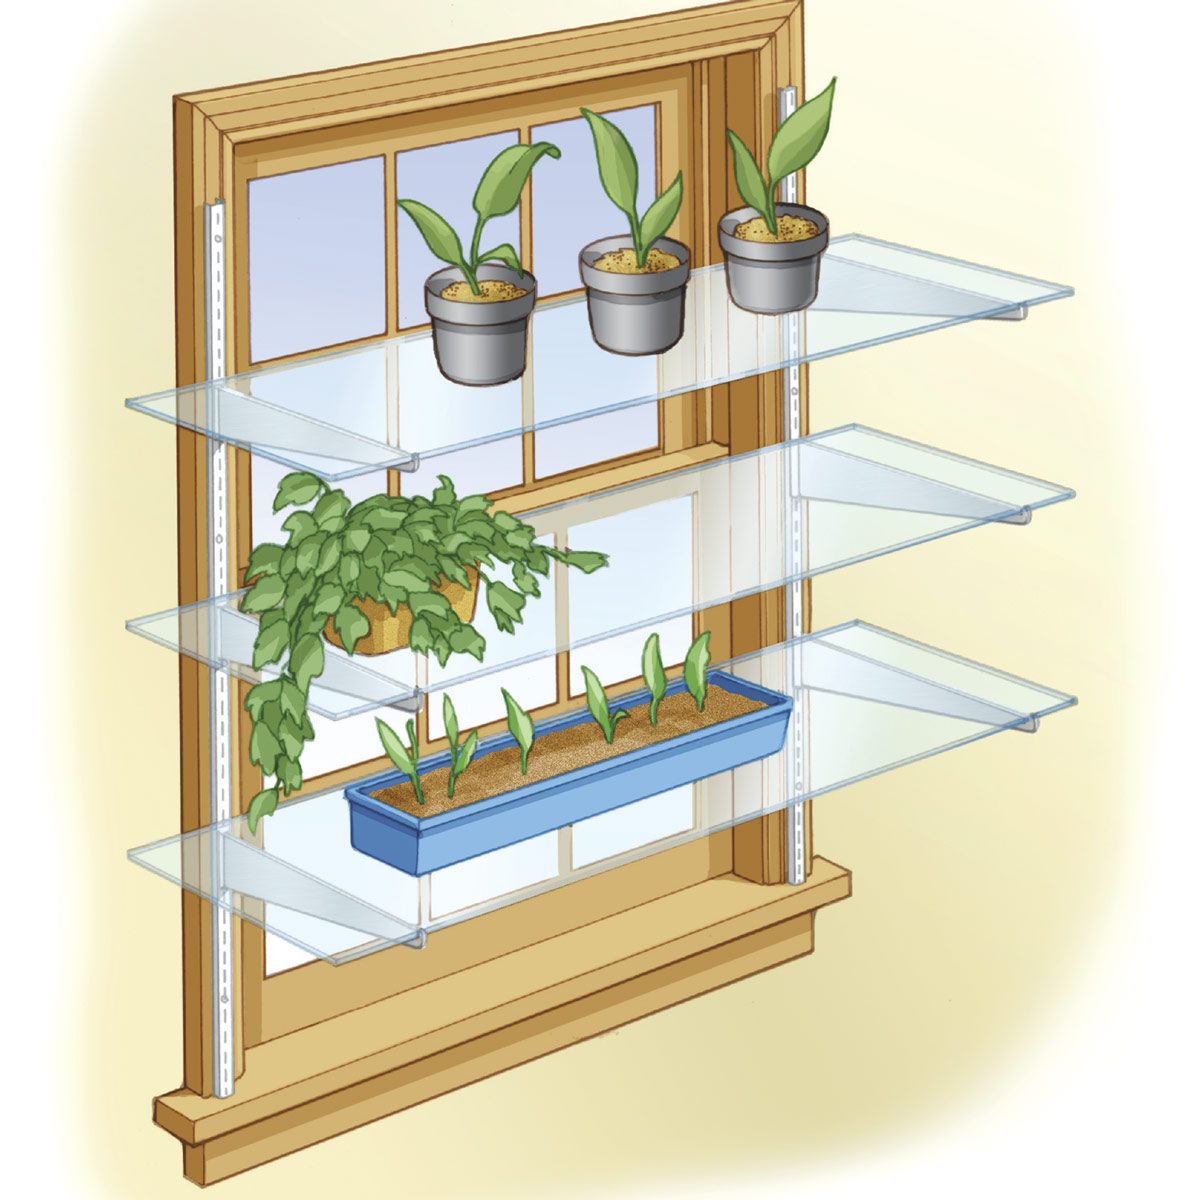 Turn a Window into a Mini Greenhouse